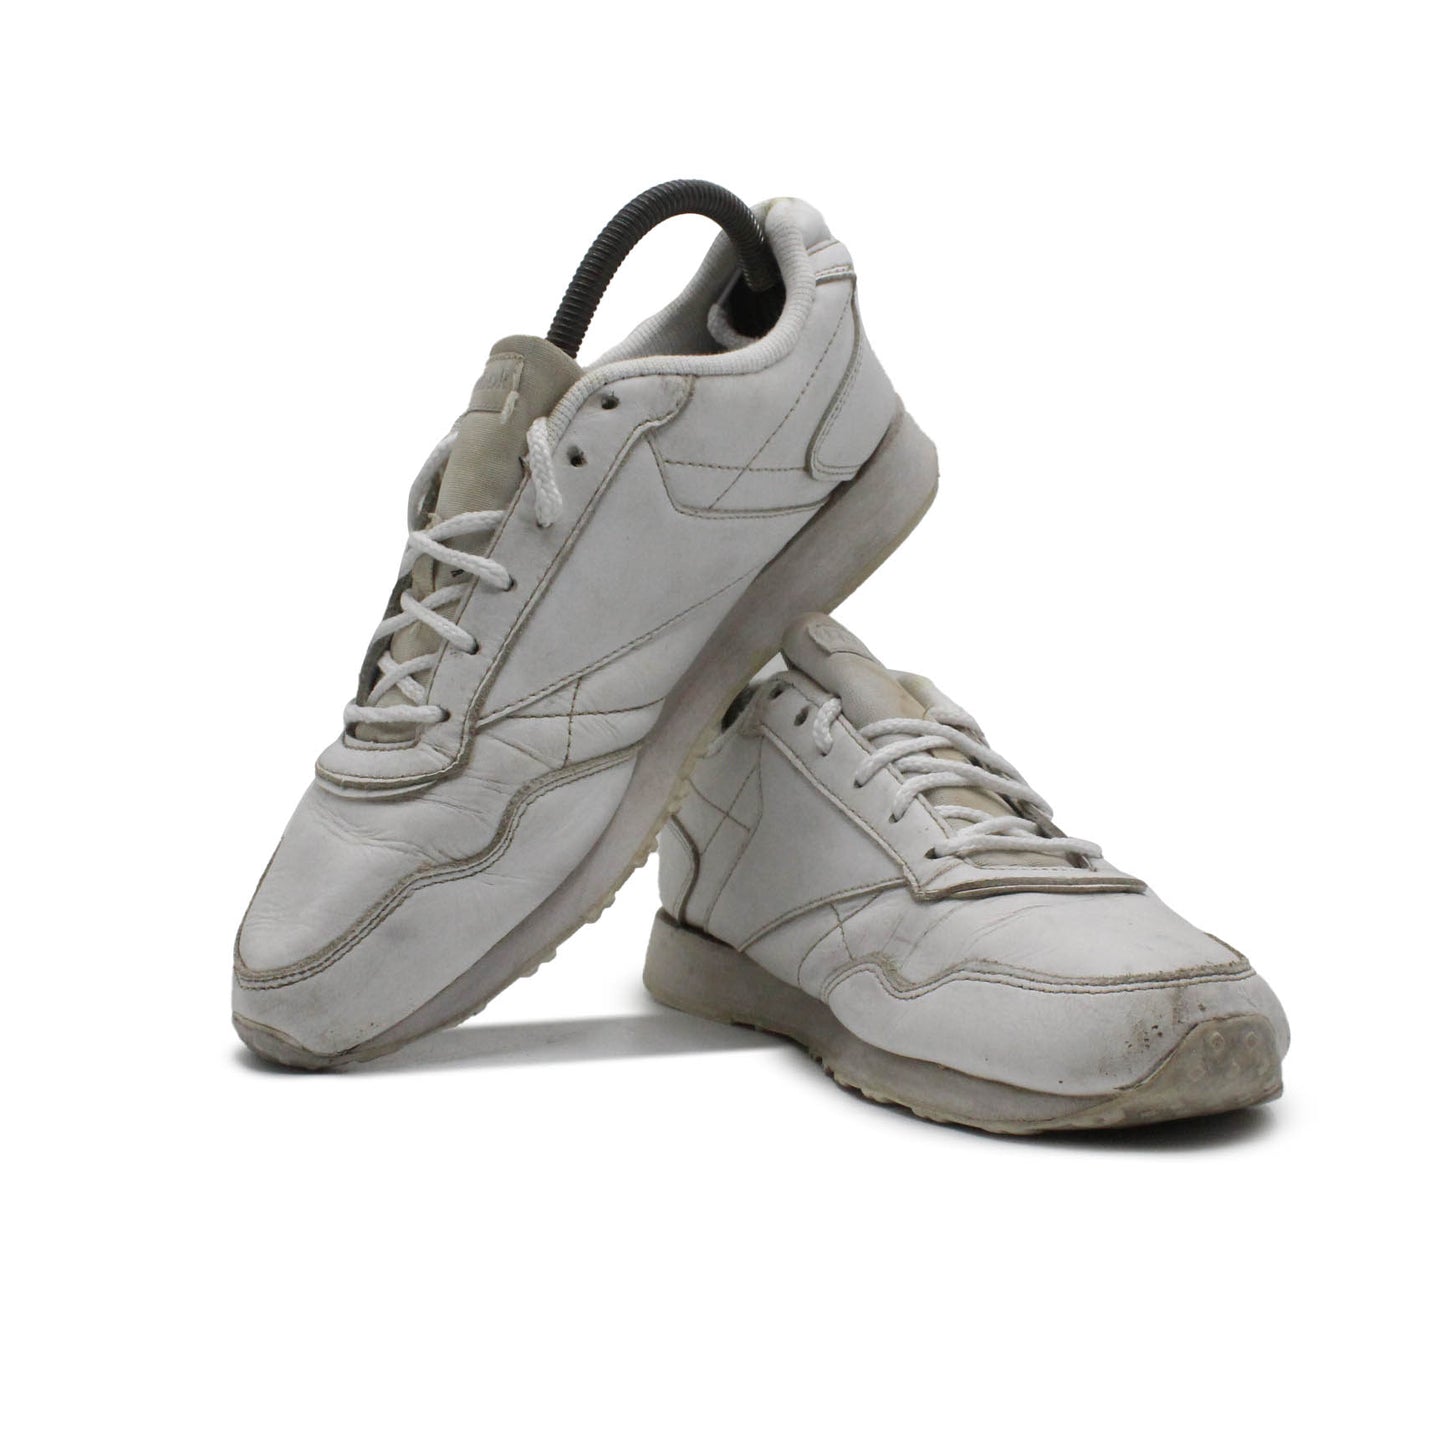 Reebok Royal Glide LX Athletic Shoe